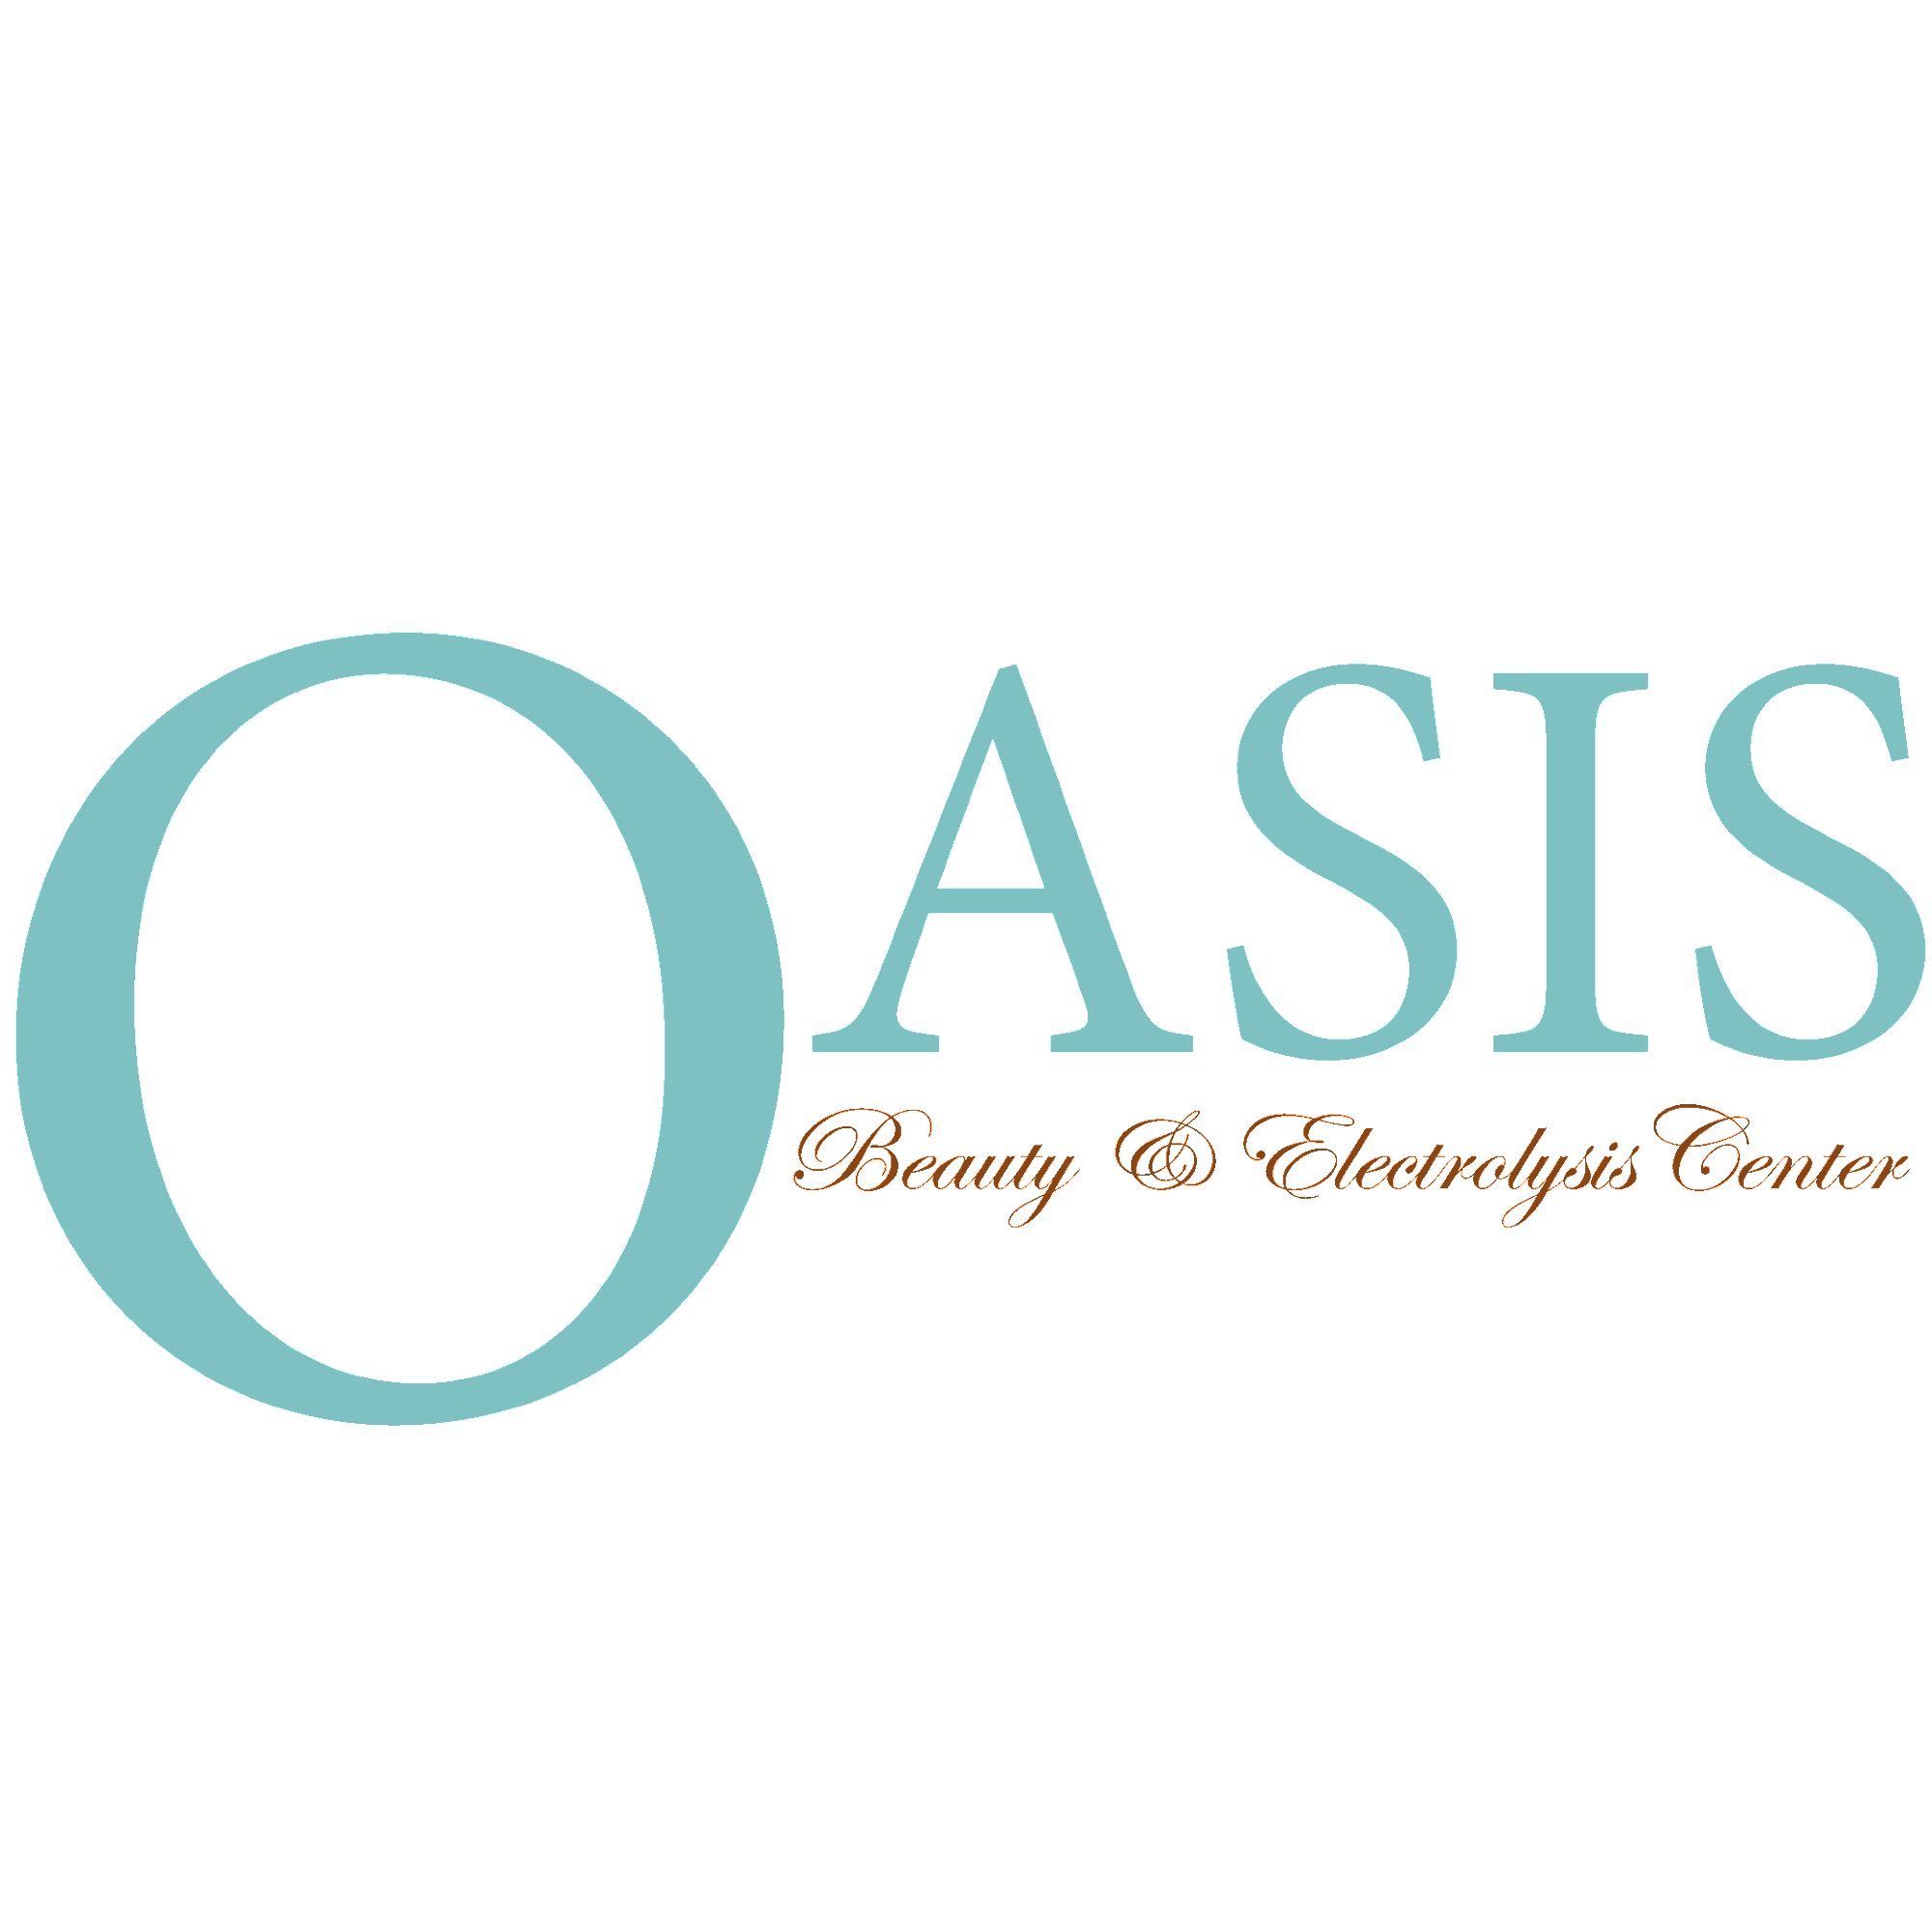 Oasis Beauty & Electrolysis Center